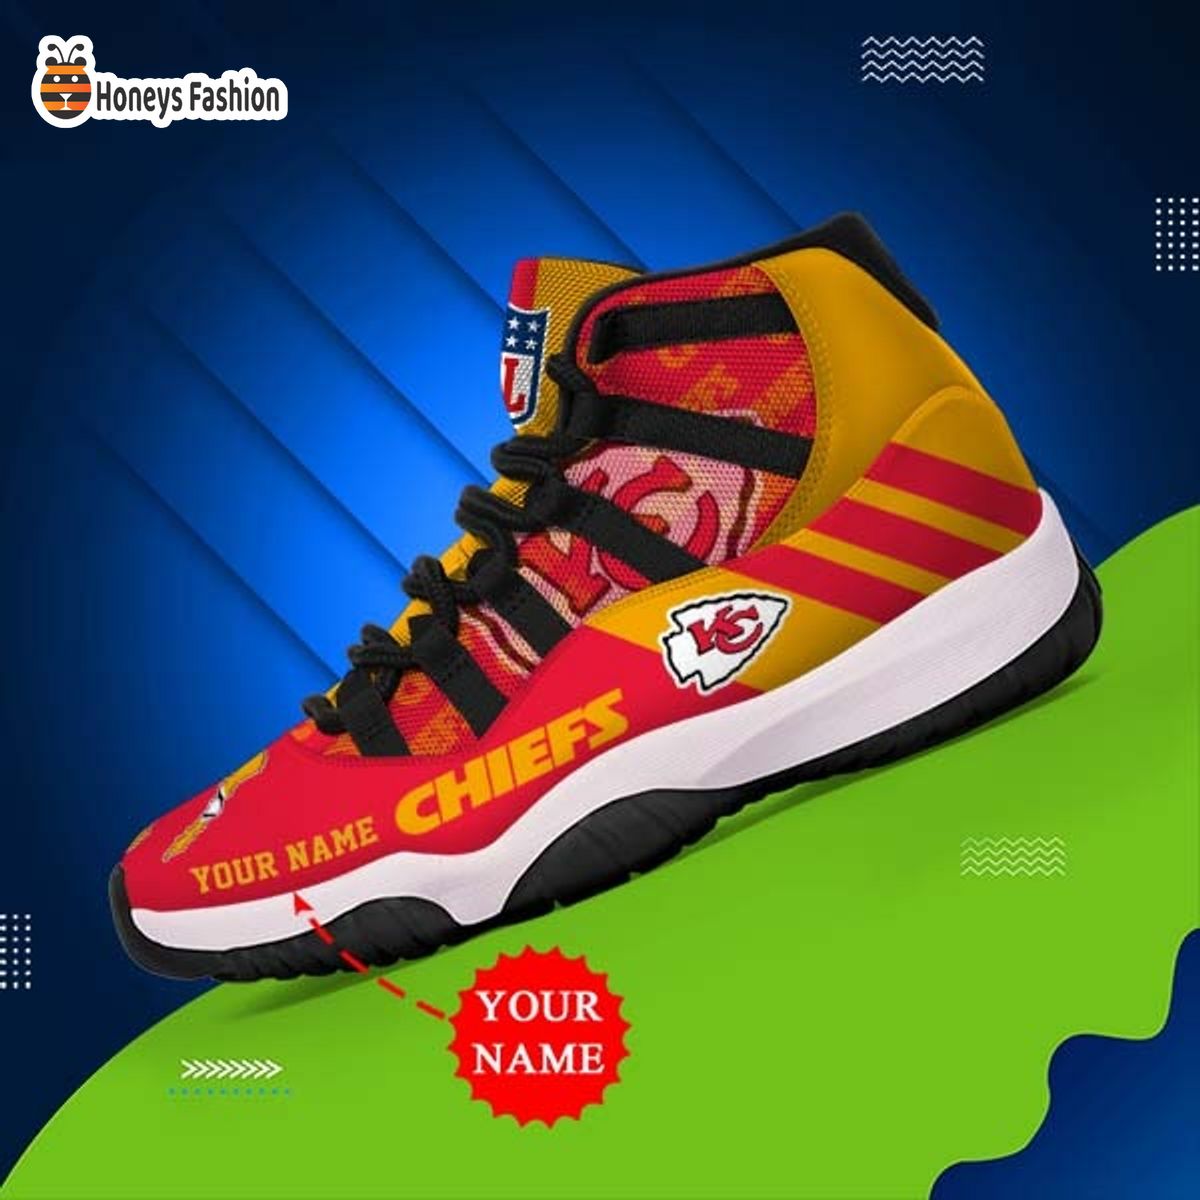 Kansas City Chiefs NFL Adidas Personalized Air Jordan 11 Shoes